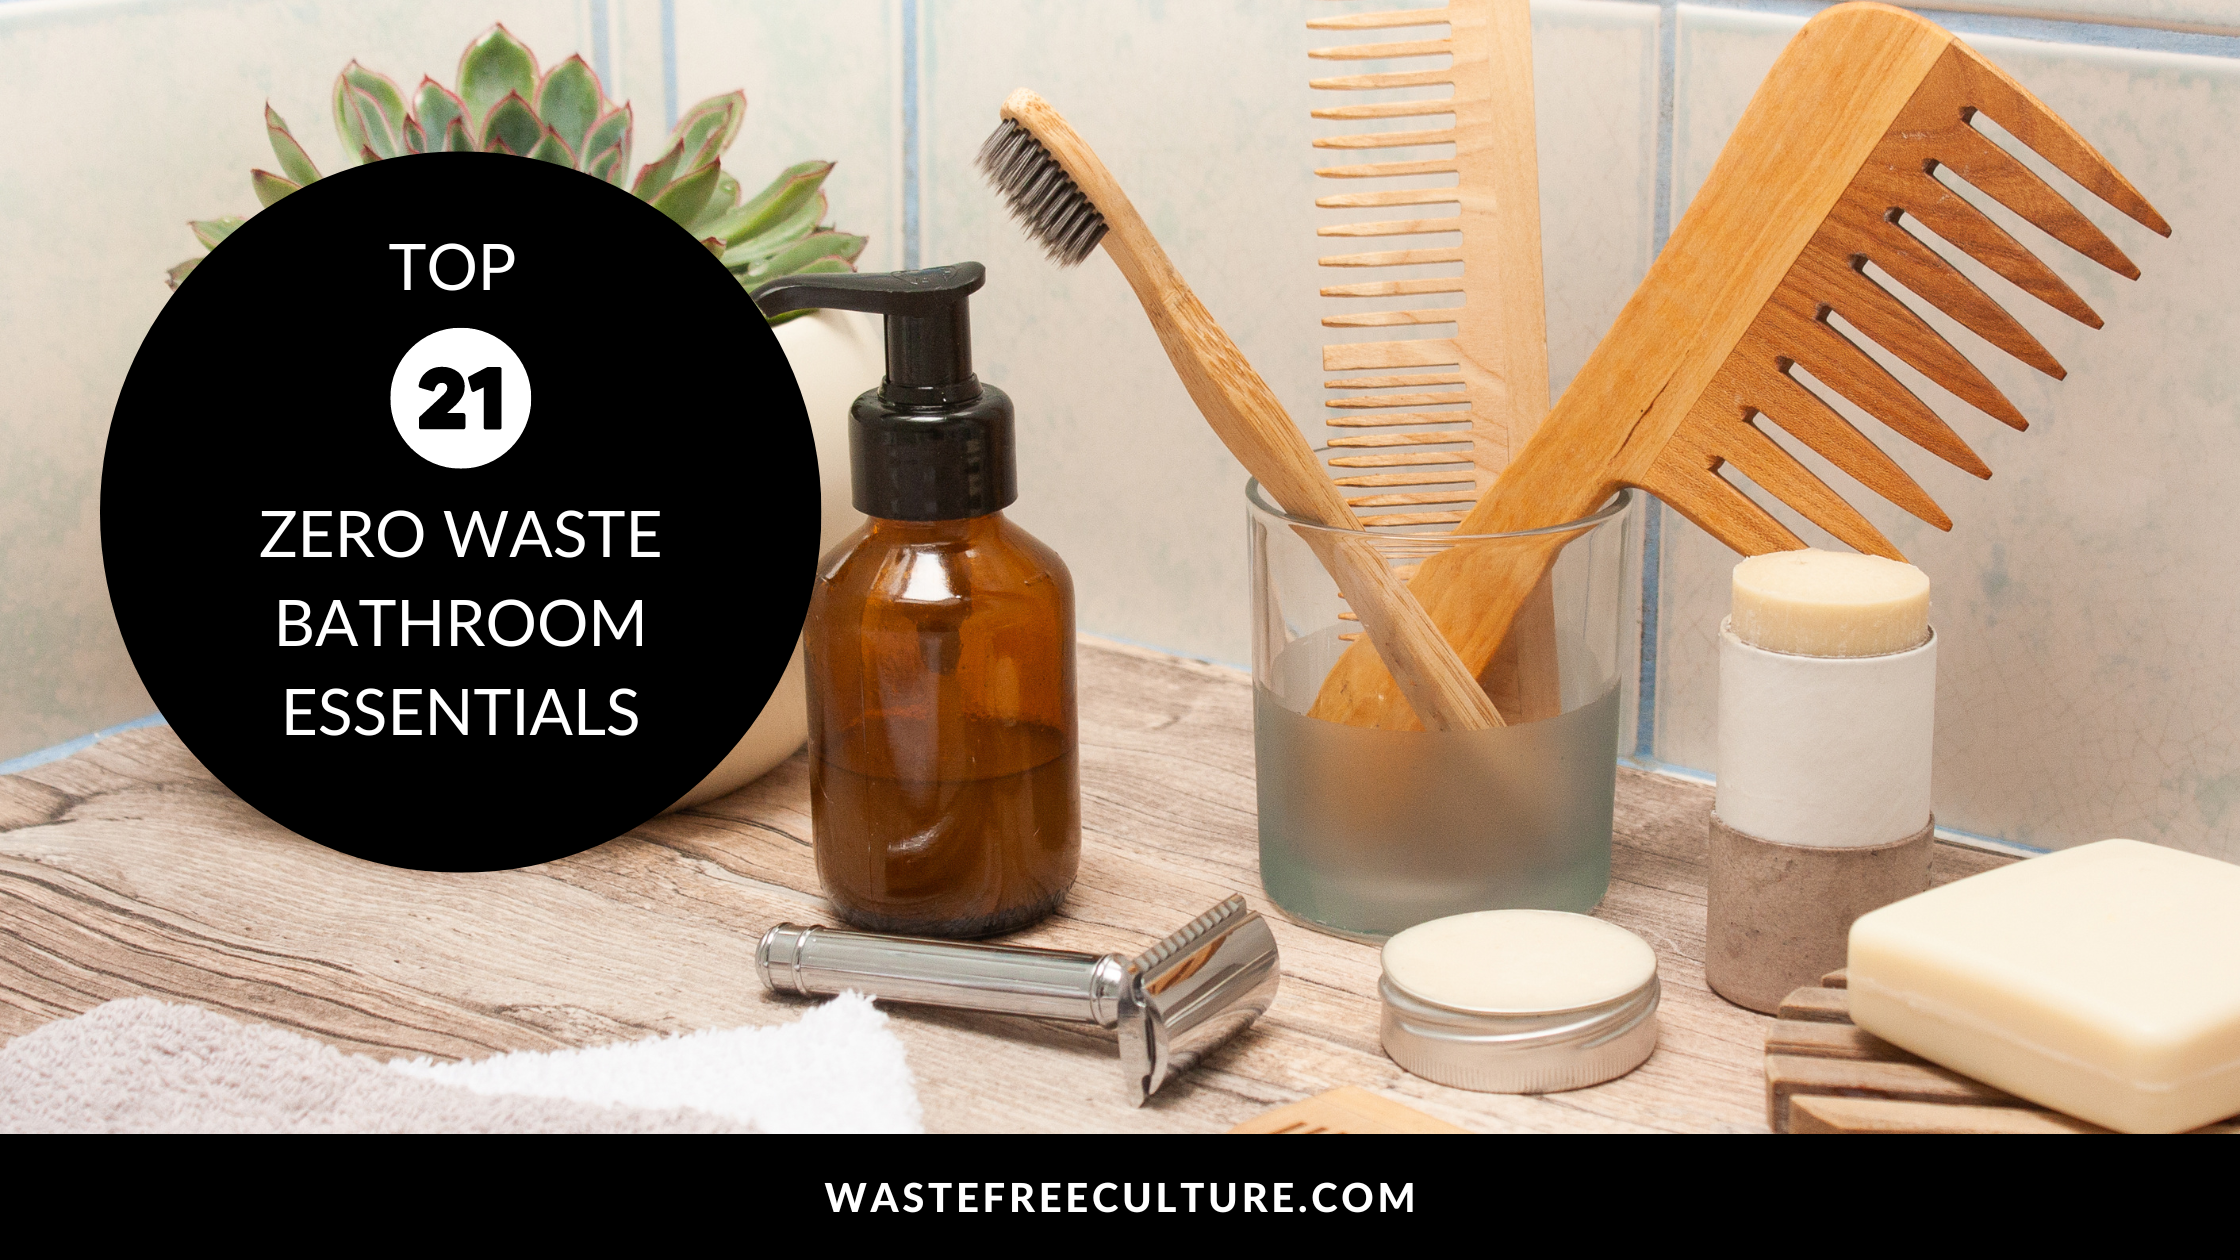 Top 21 Zero Waste Bathroom Essentials